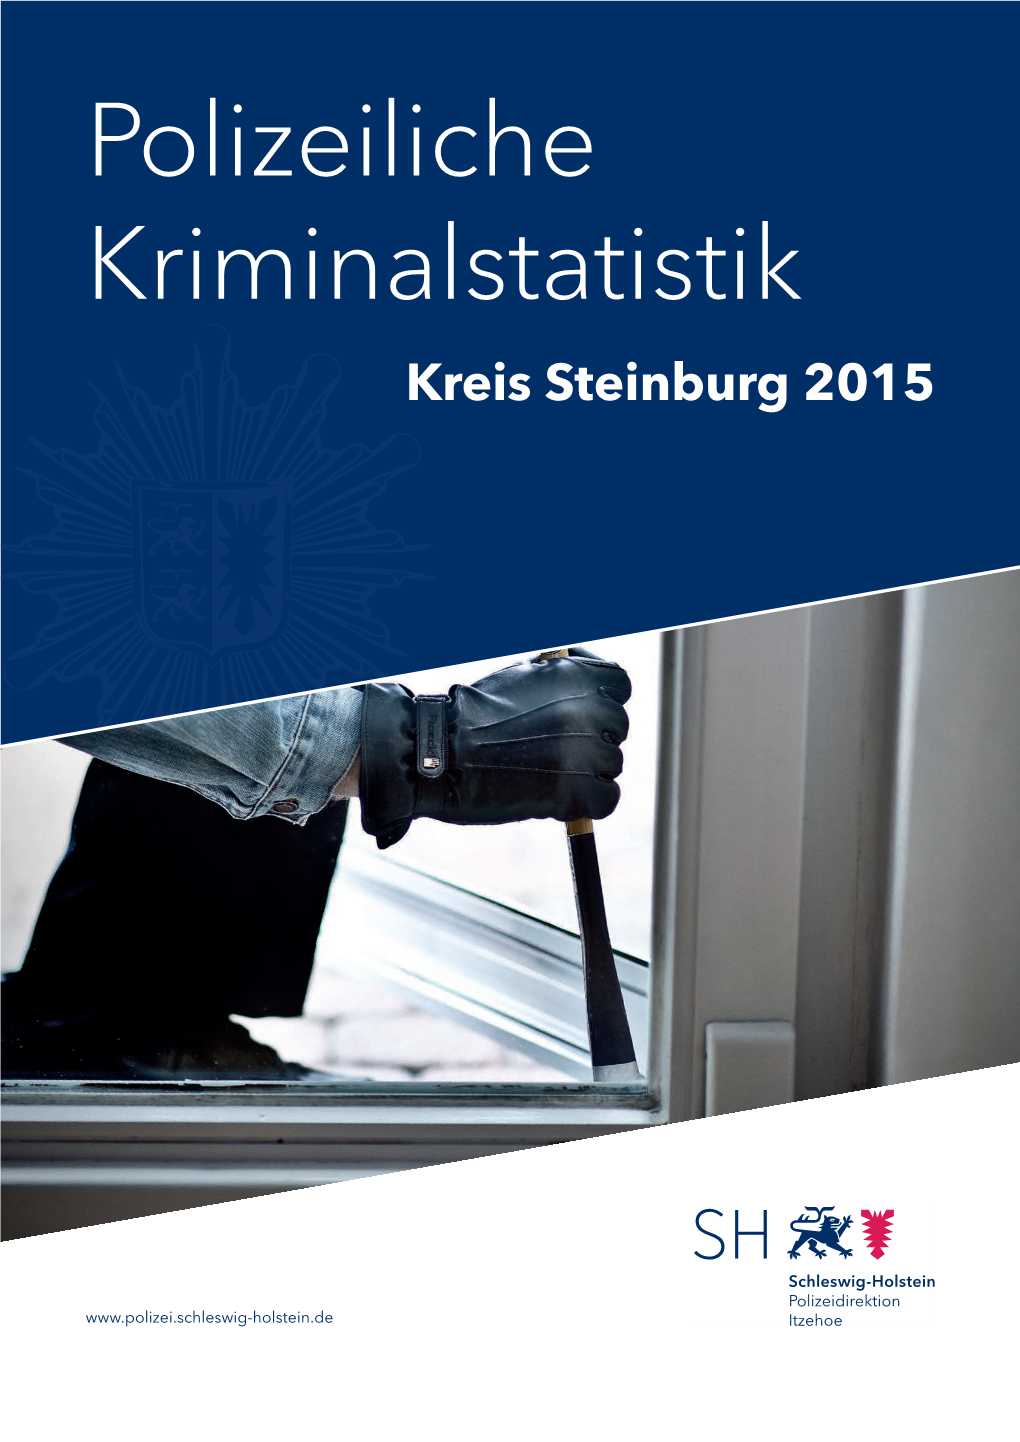 PKS Steinburg 2015